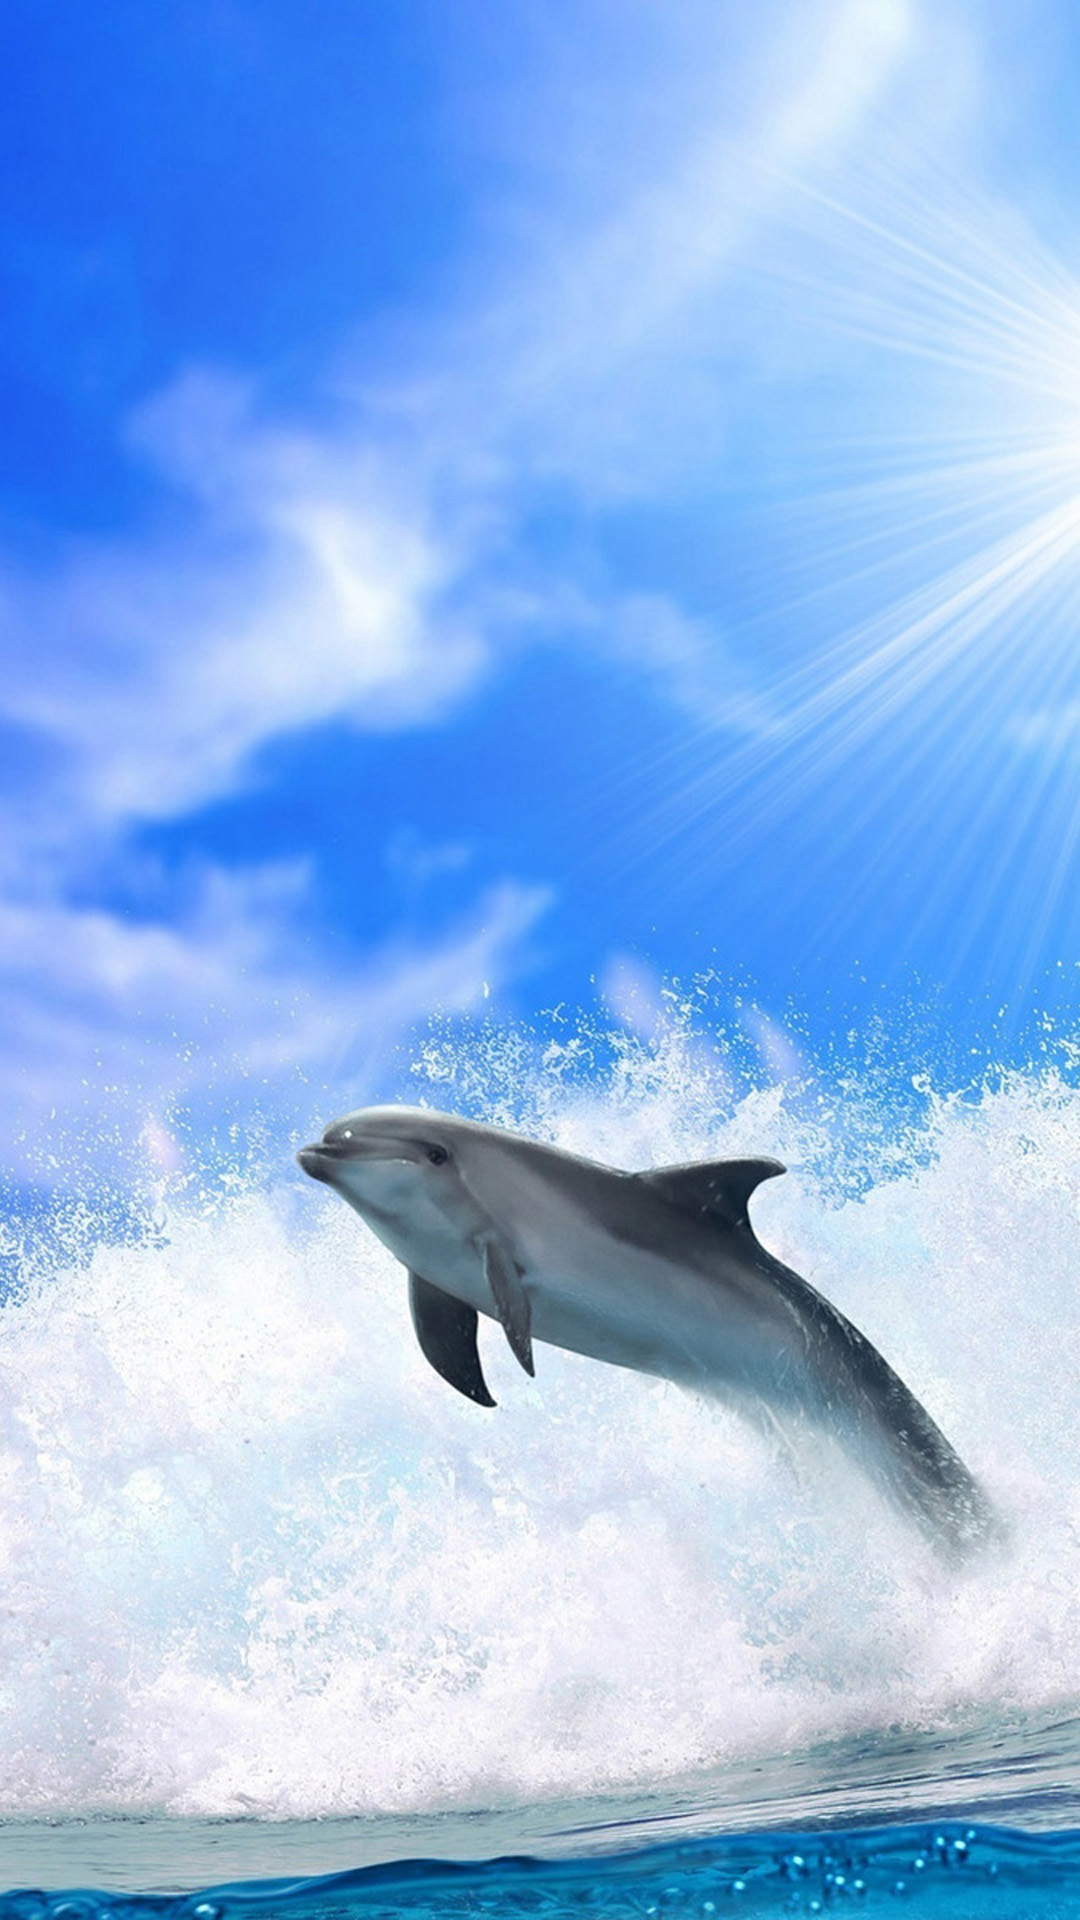 Dolphin Wallpaper Iphone 8 1080x19 Wallpaper Teahub Io